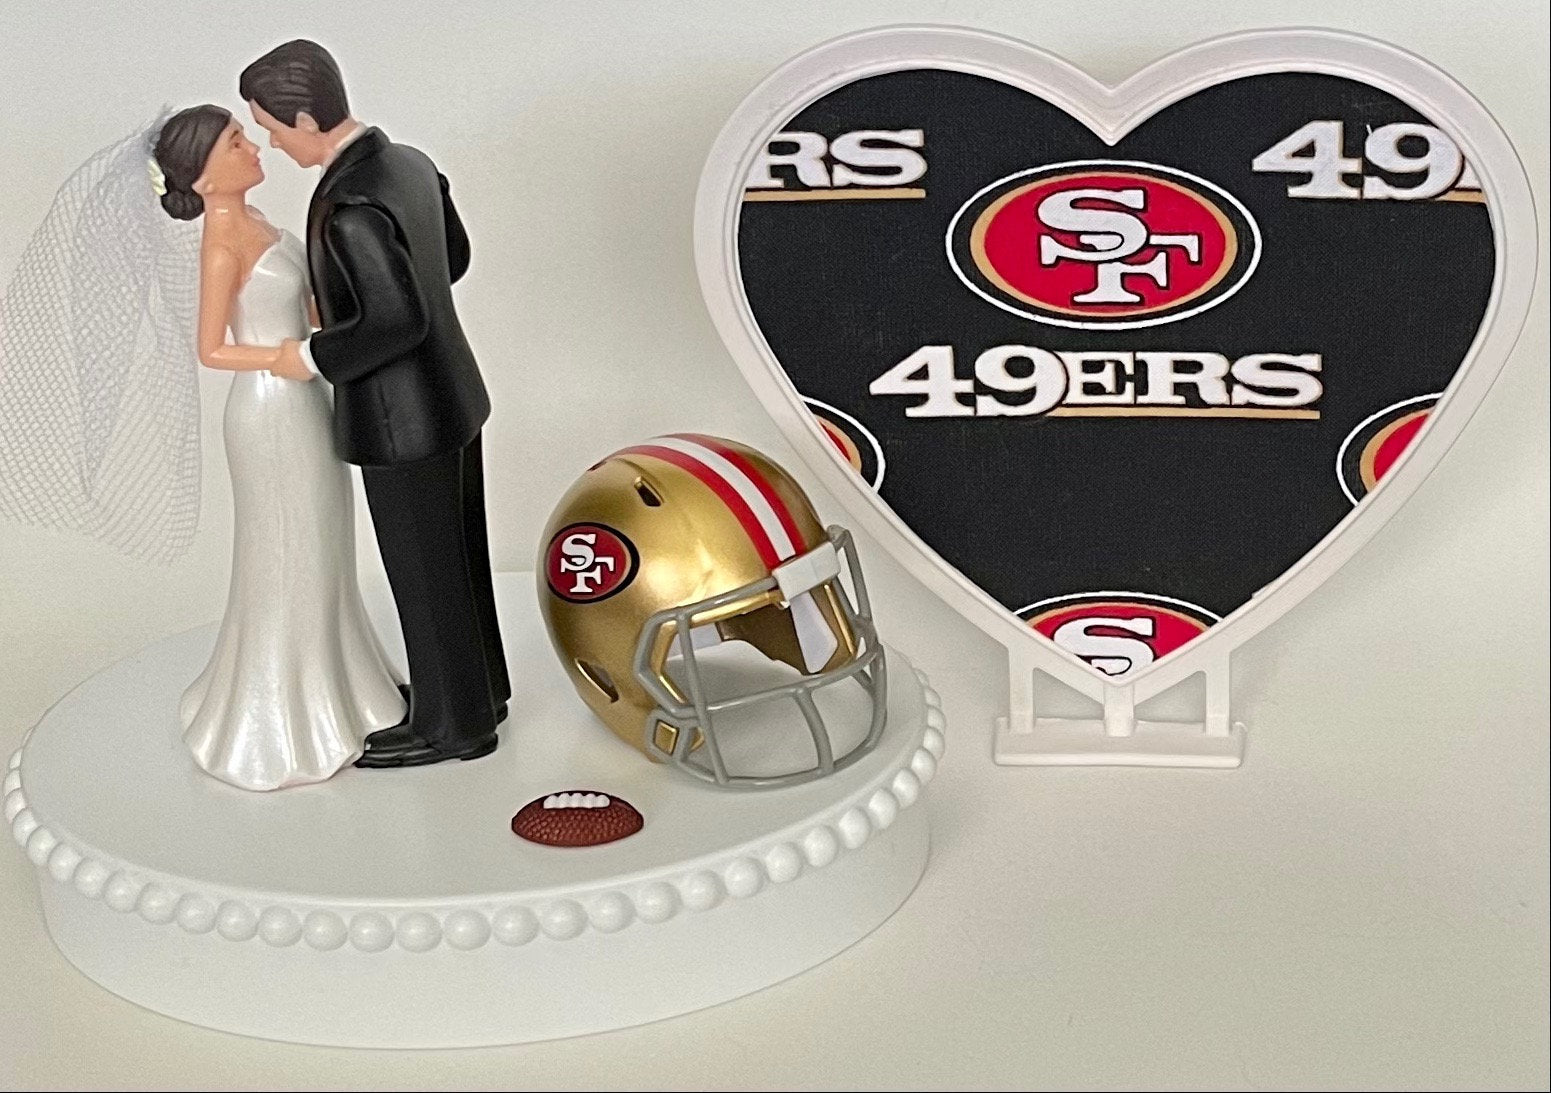 NFL San Francisco 49ers Photo Cake